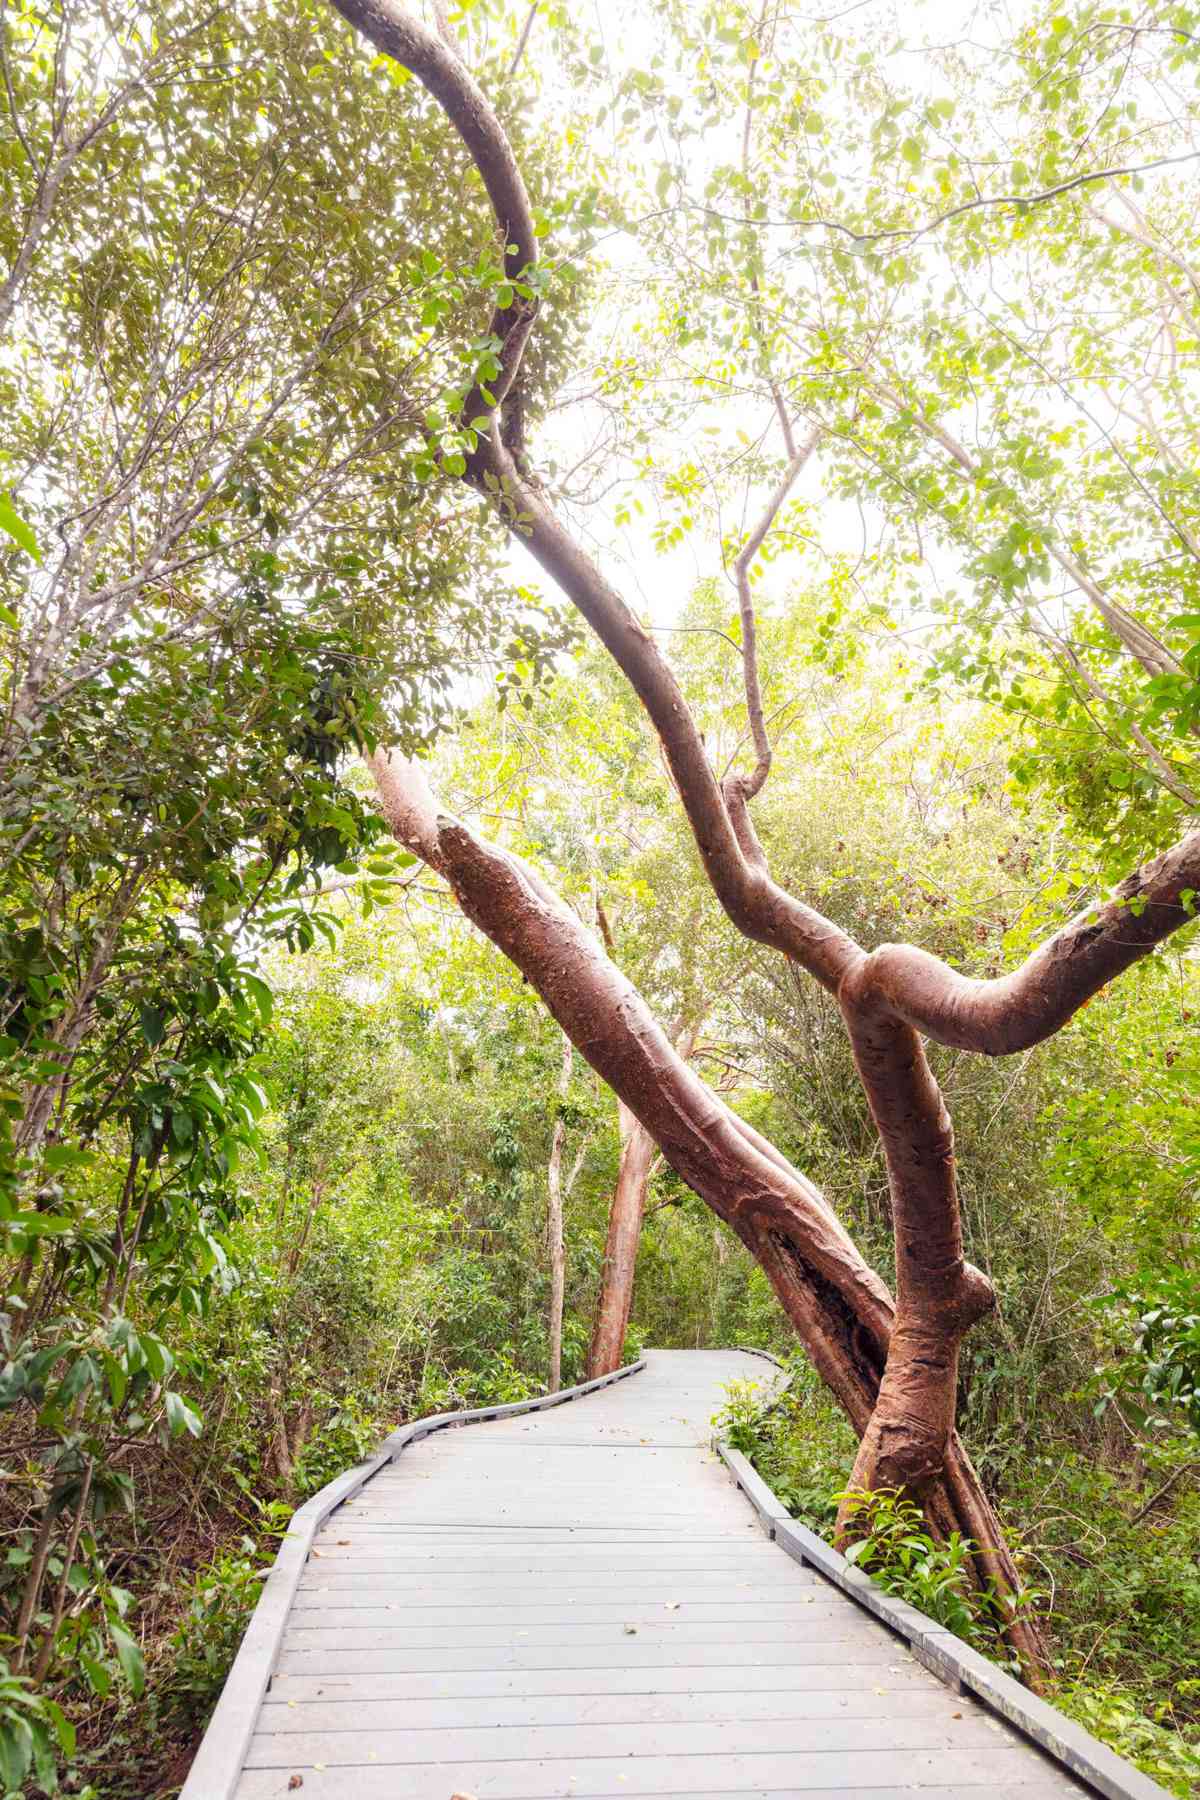 Wooden bike path through natural foliage on Sanibel Island, FL